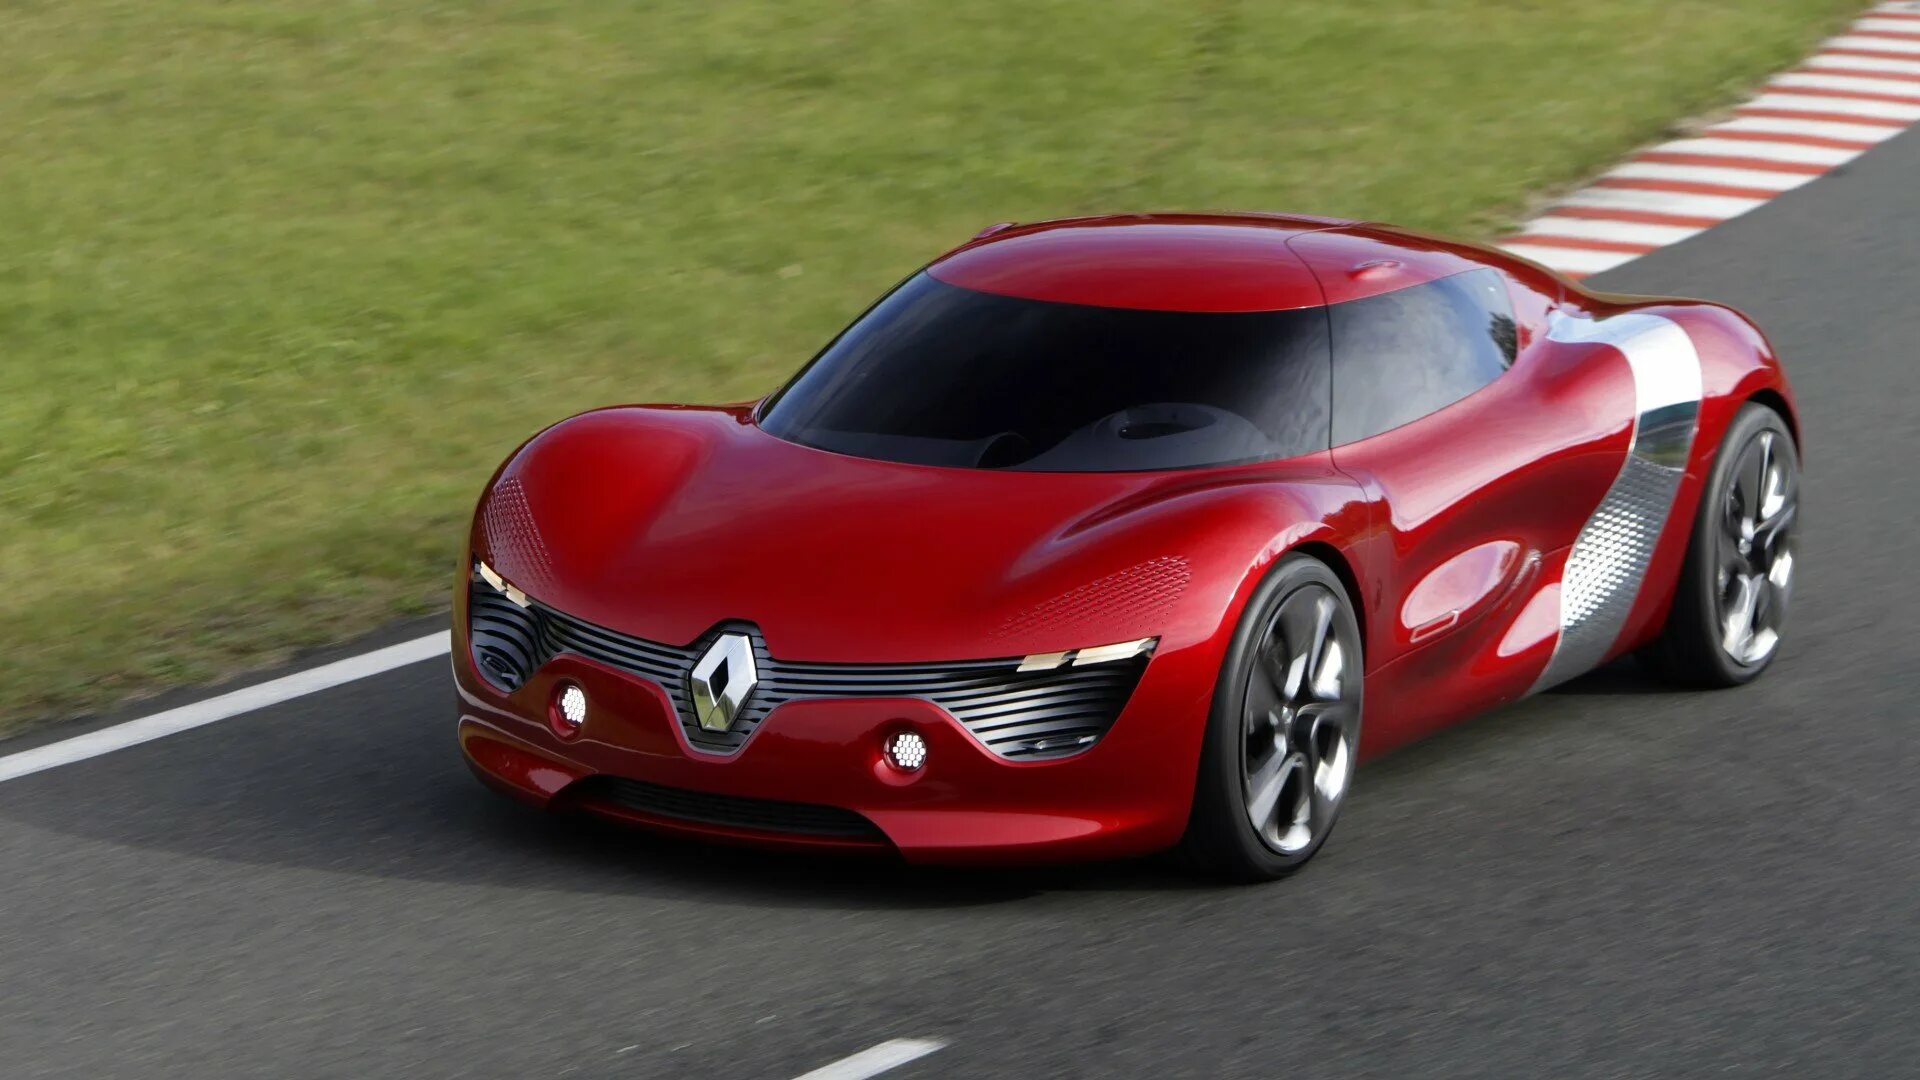 Какая последняя версия car. Машина Renault DEZIR. Renault DEZIR Concept. Renault DEZIR Concept 2010. Рено концепт кар.